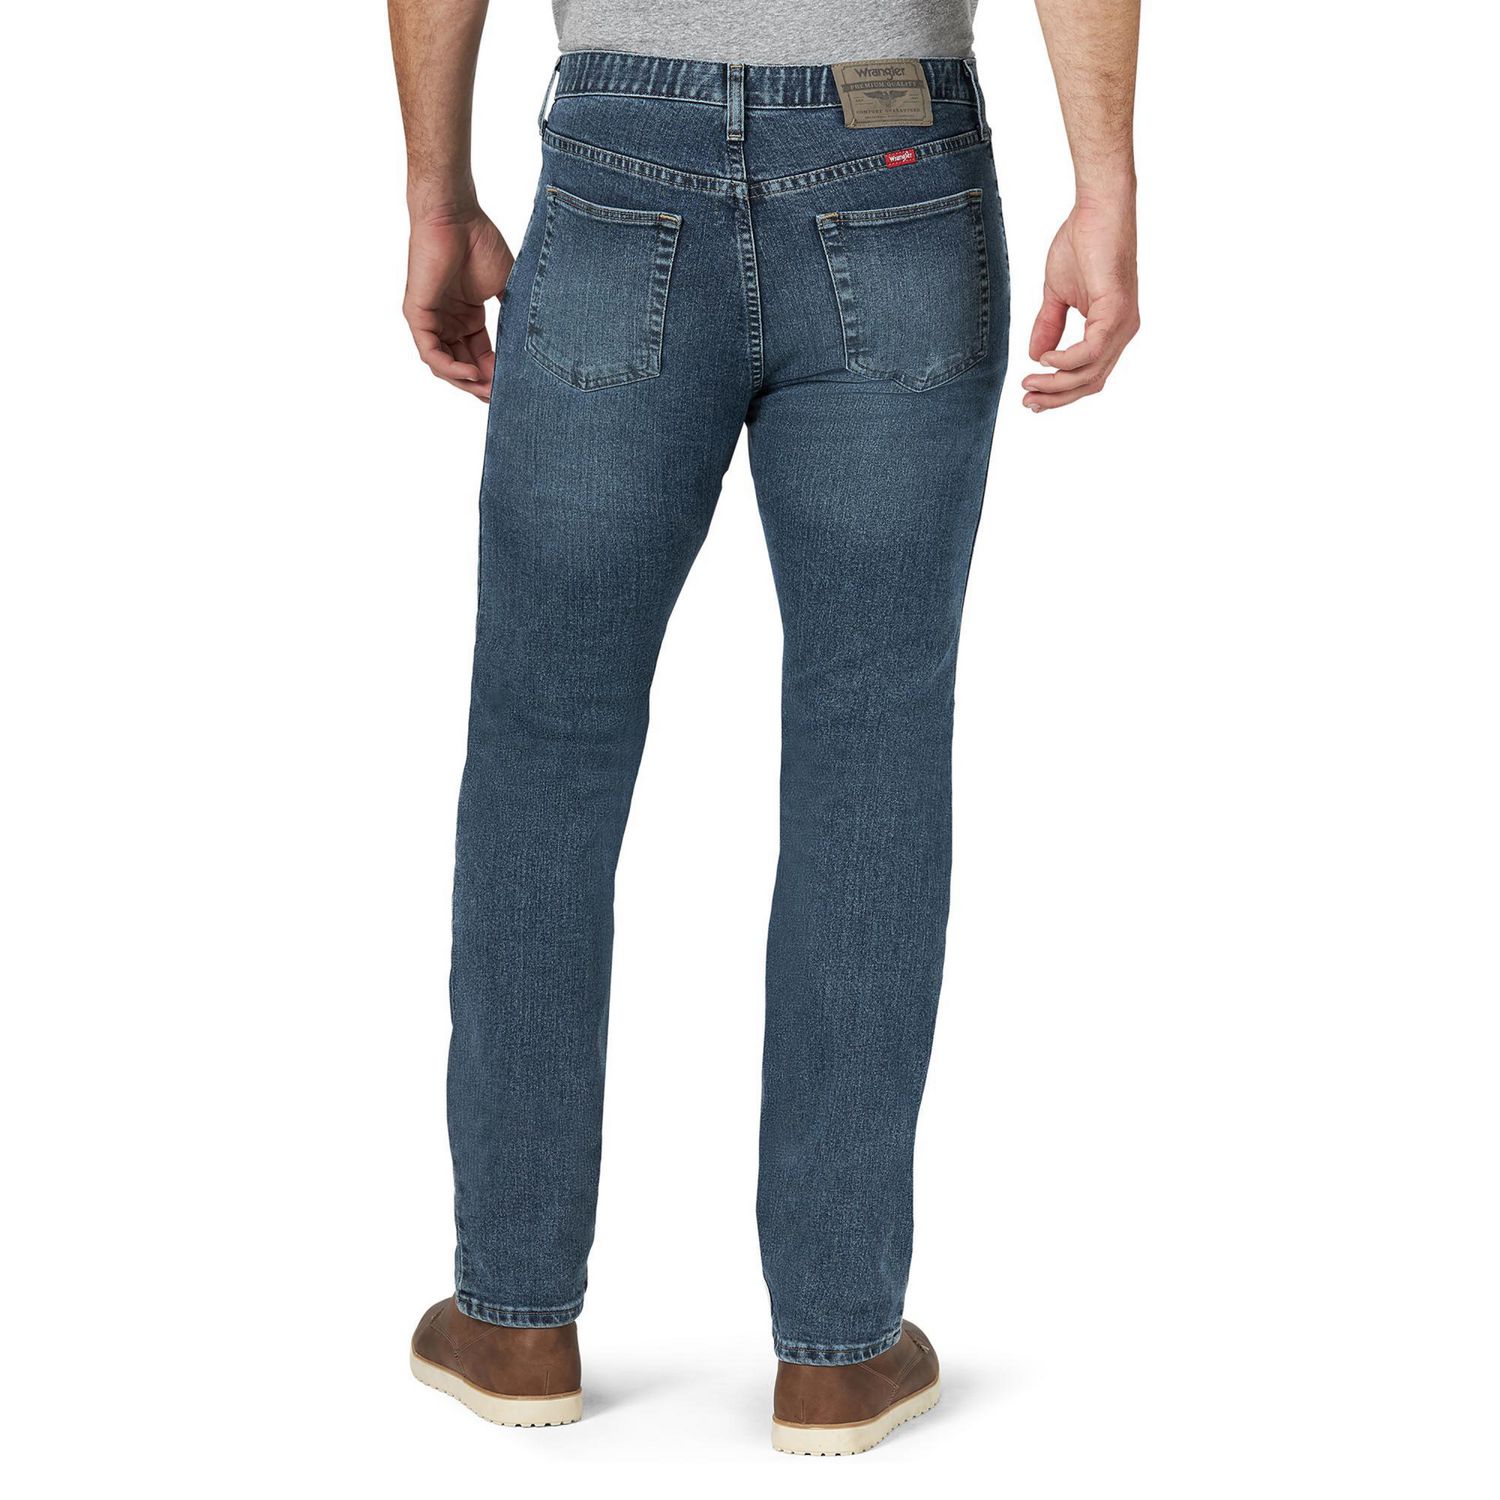 Performance Comfort Fleece-Lined Jeans - KEY Apparel